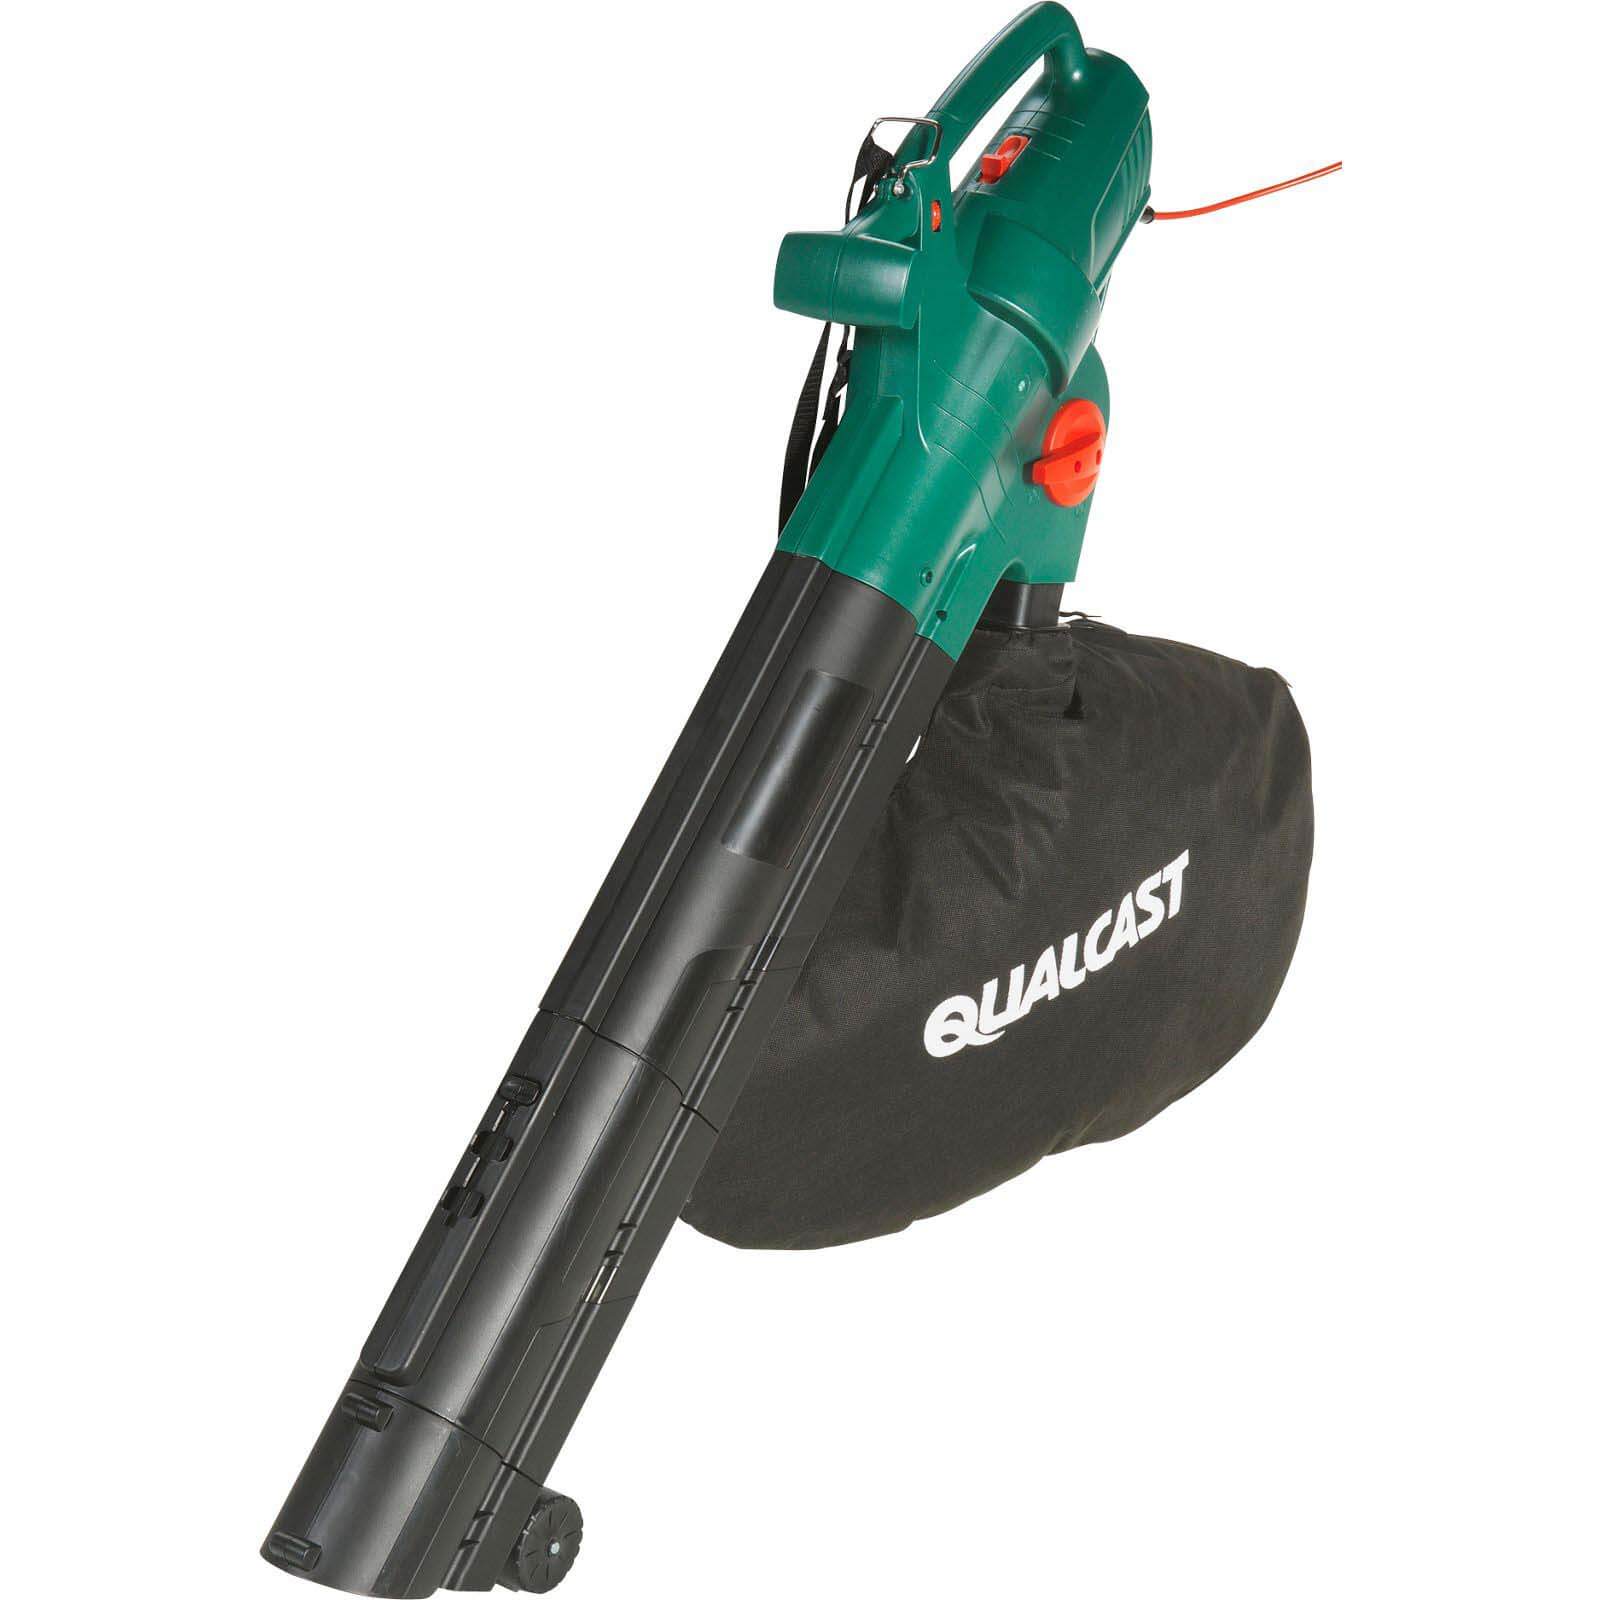 Qualcast 2800W Garden Leaf Blower and Vacuum